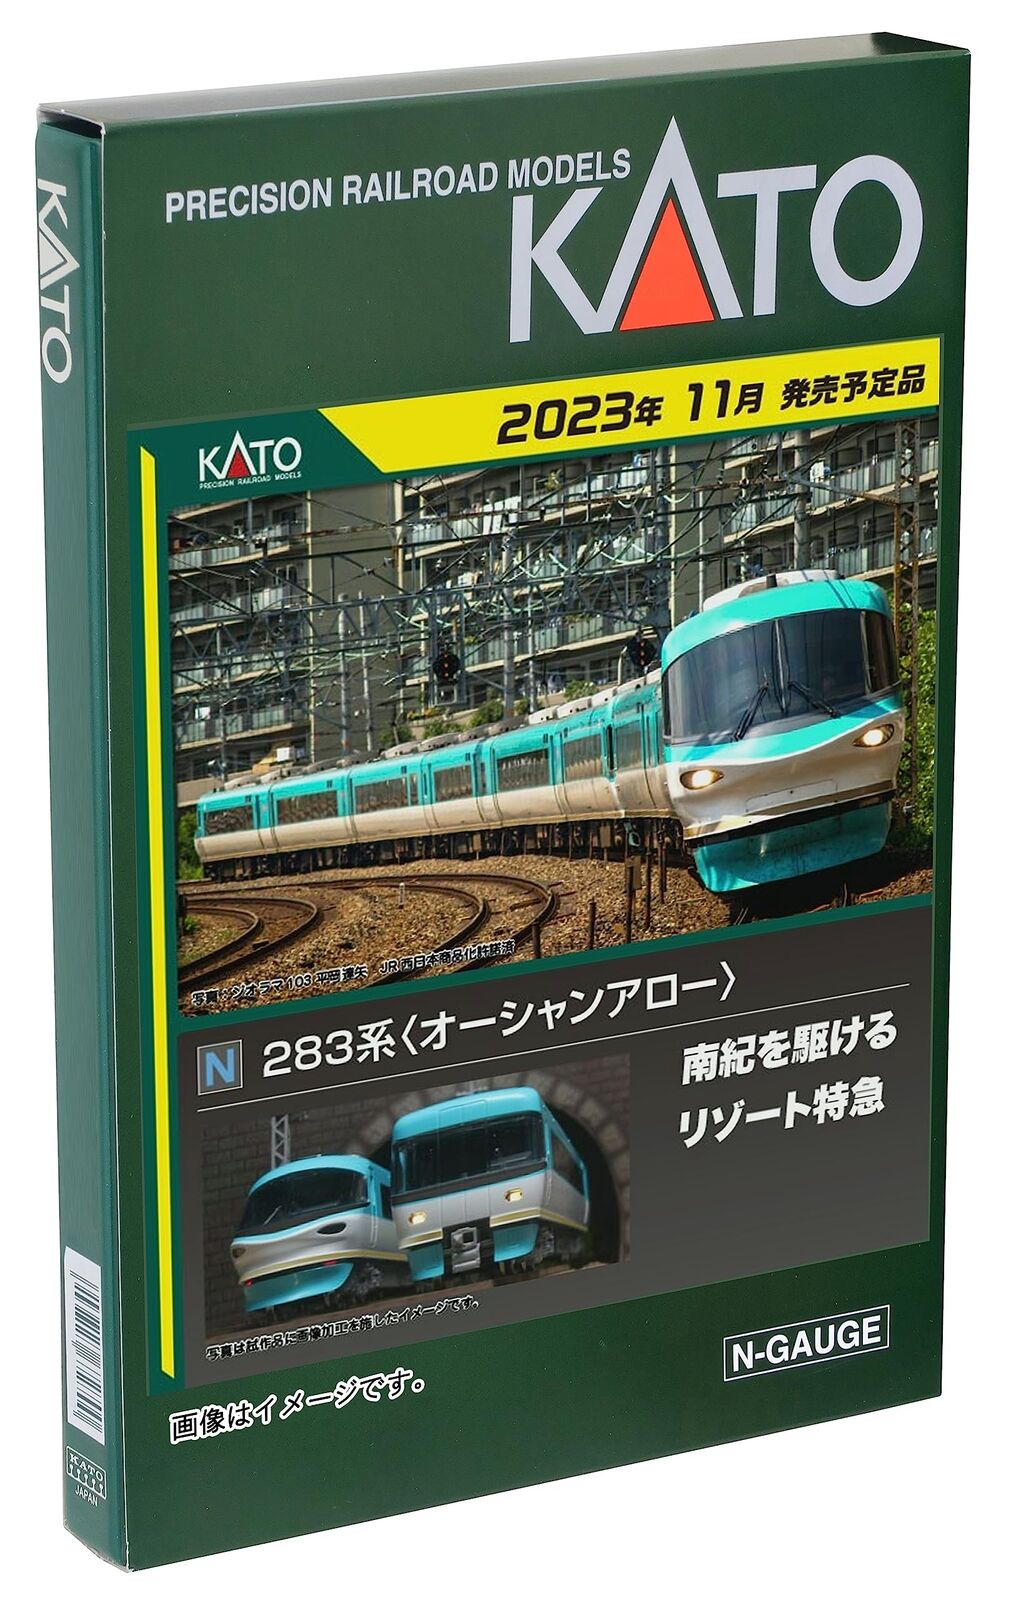 KATO N Gauge 283series Ocean Arrow 6cars Basic Set 10-1840 Railway Model Train